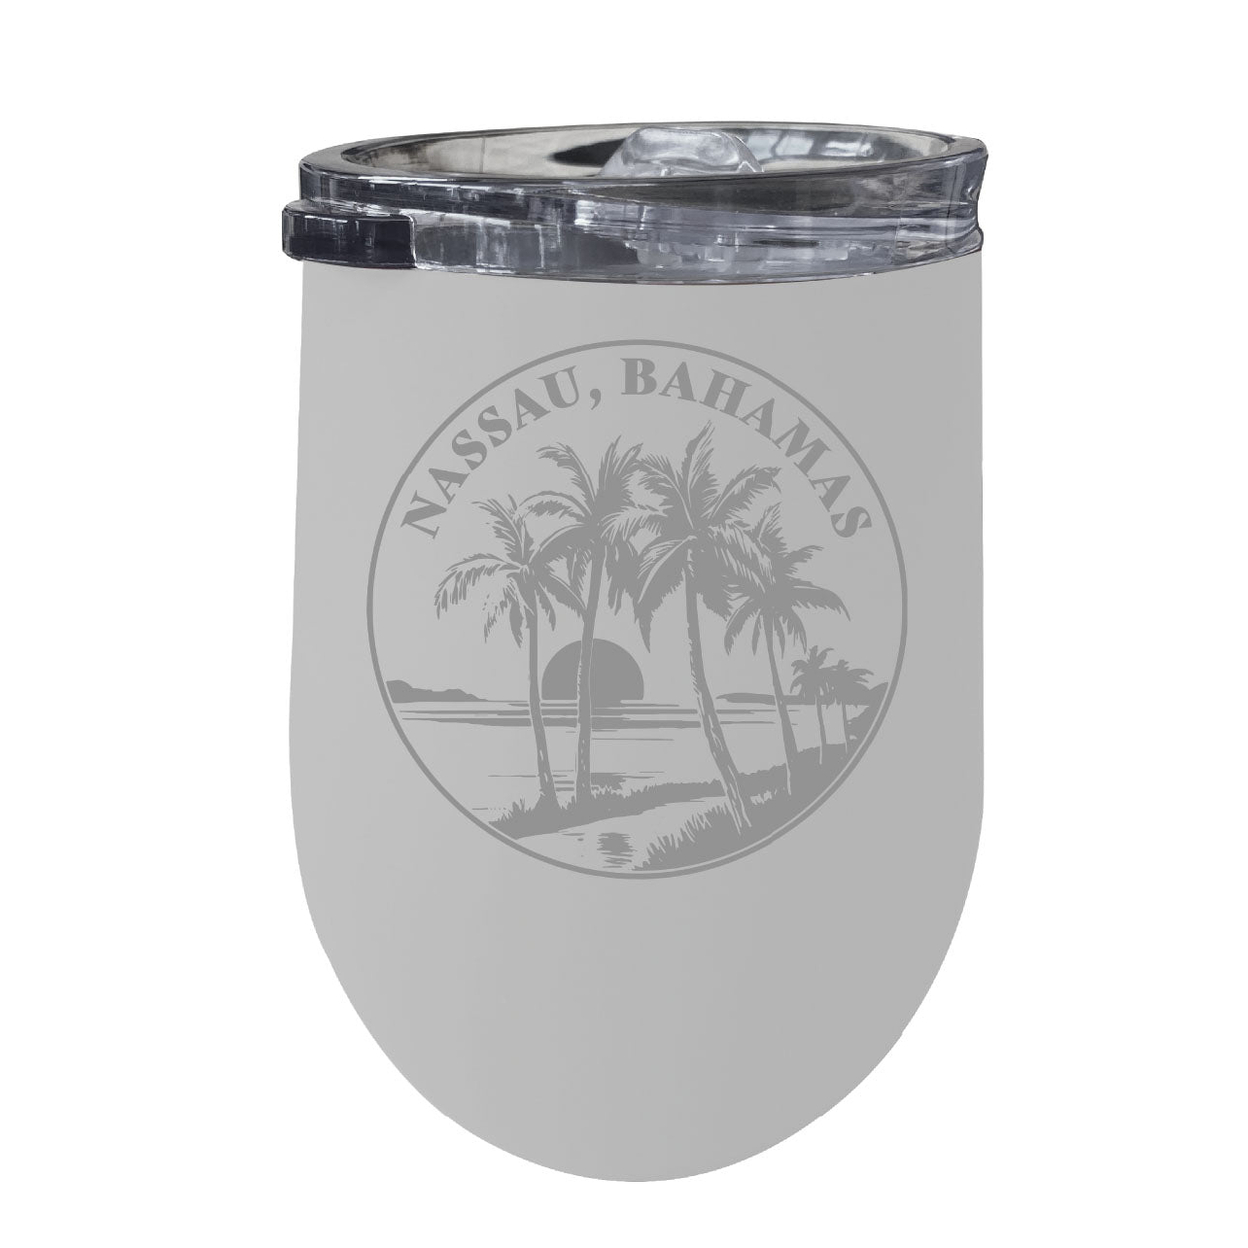 Nassau The Bahamas Souvenir 12 Oz Engraved Insulated Wine Stainless Steel Tumbler - White,,Single Unit